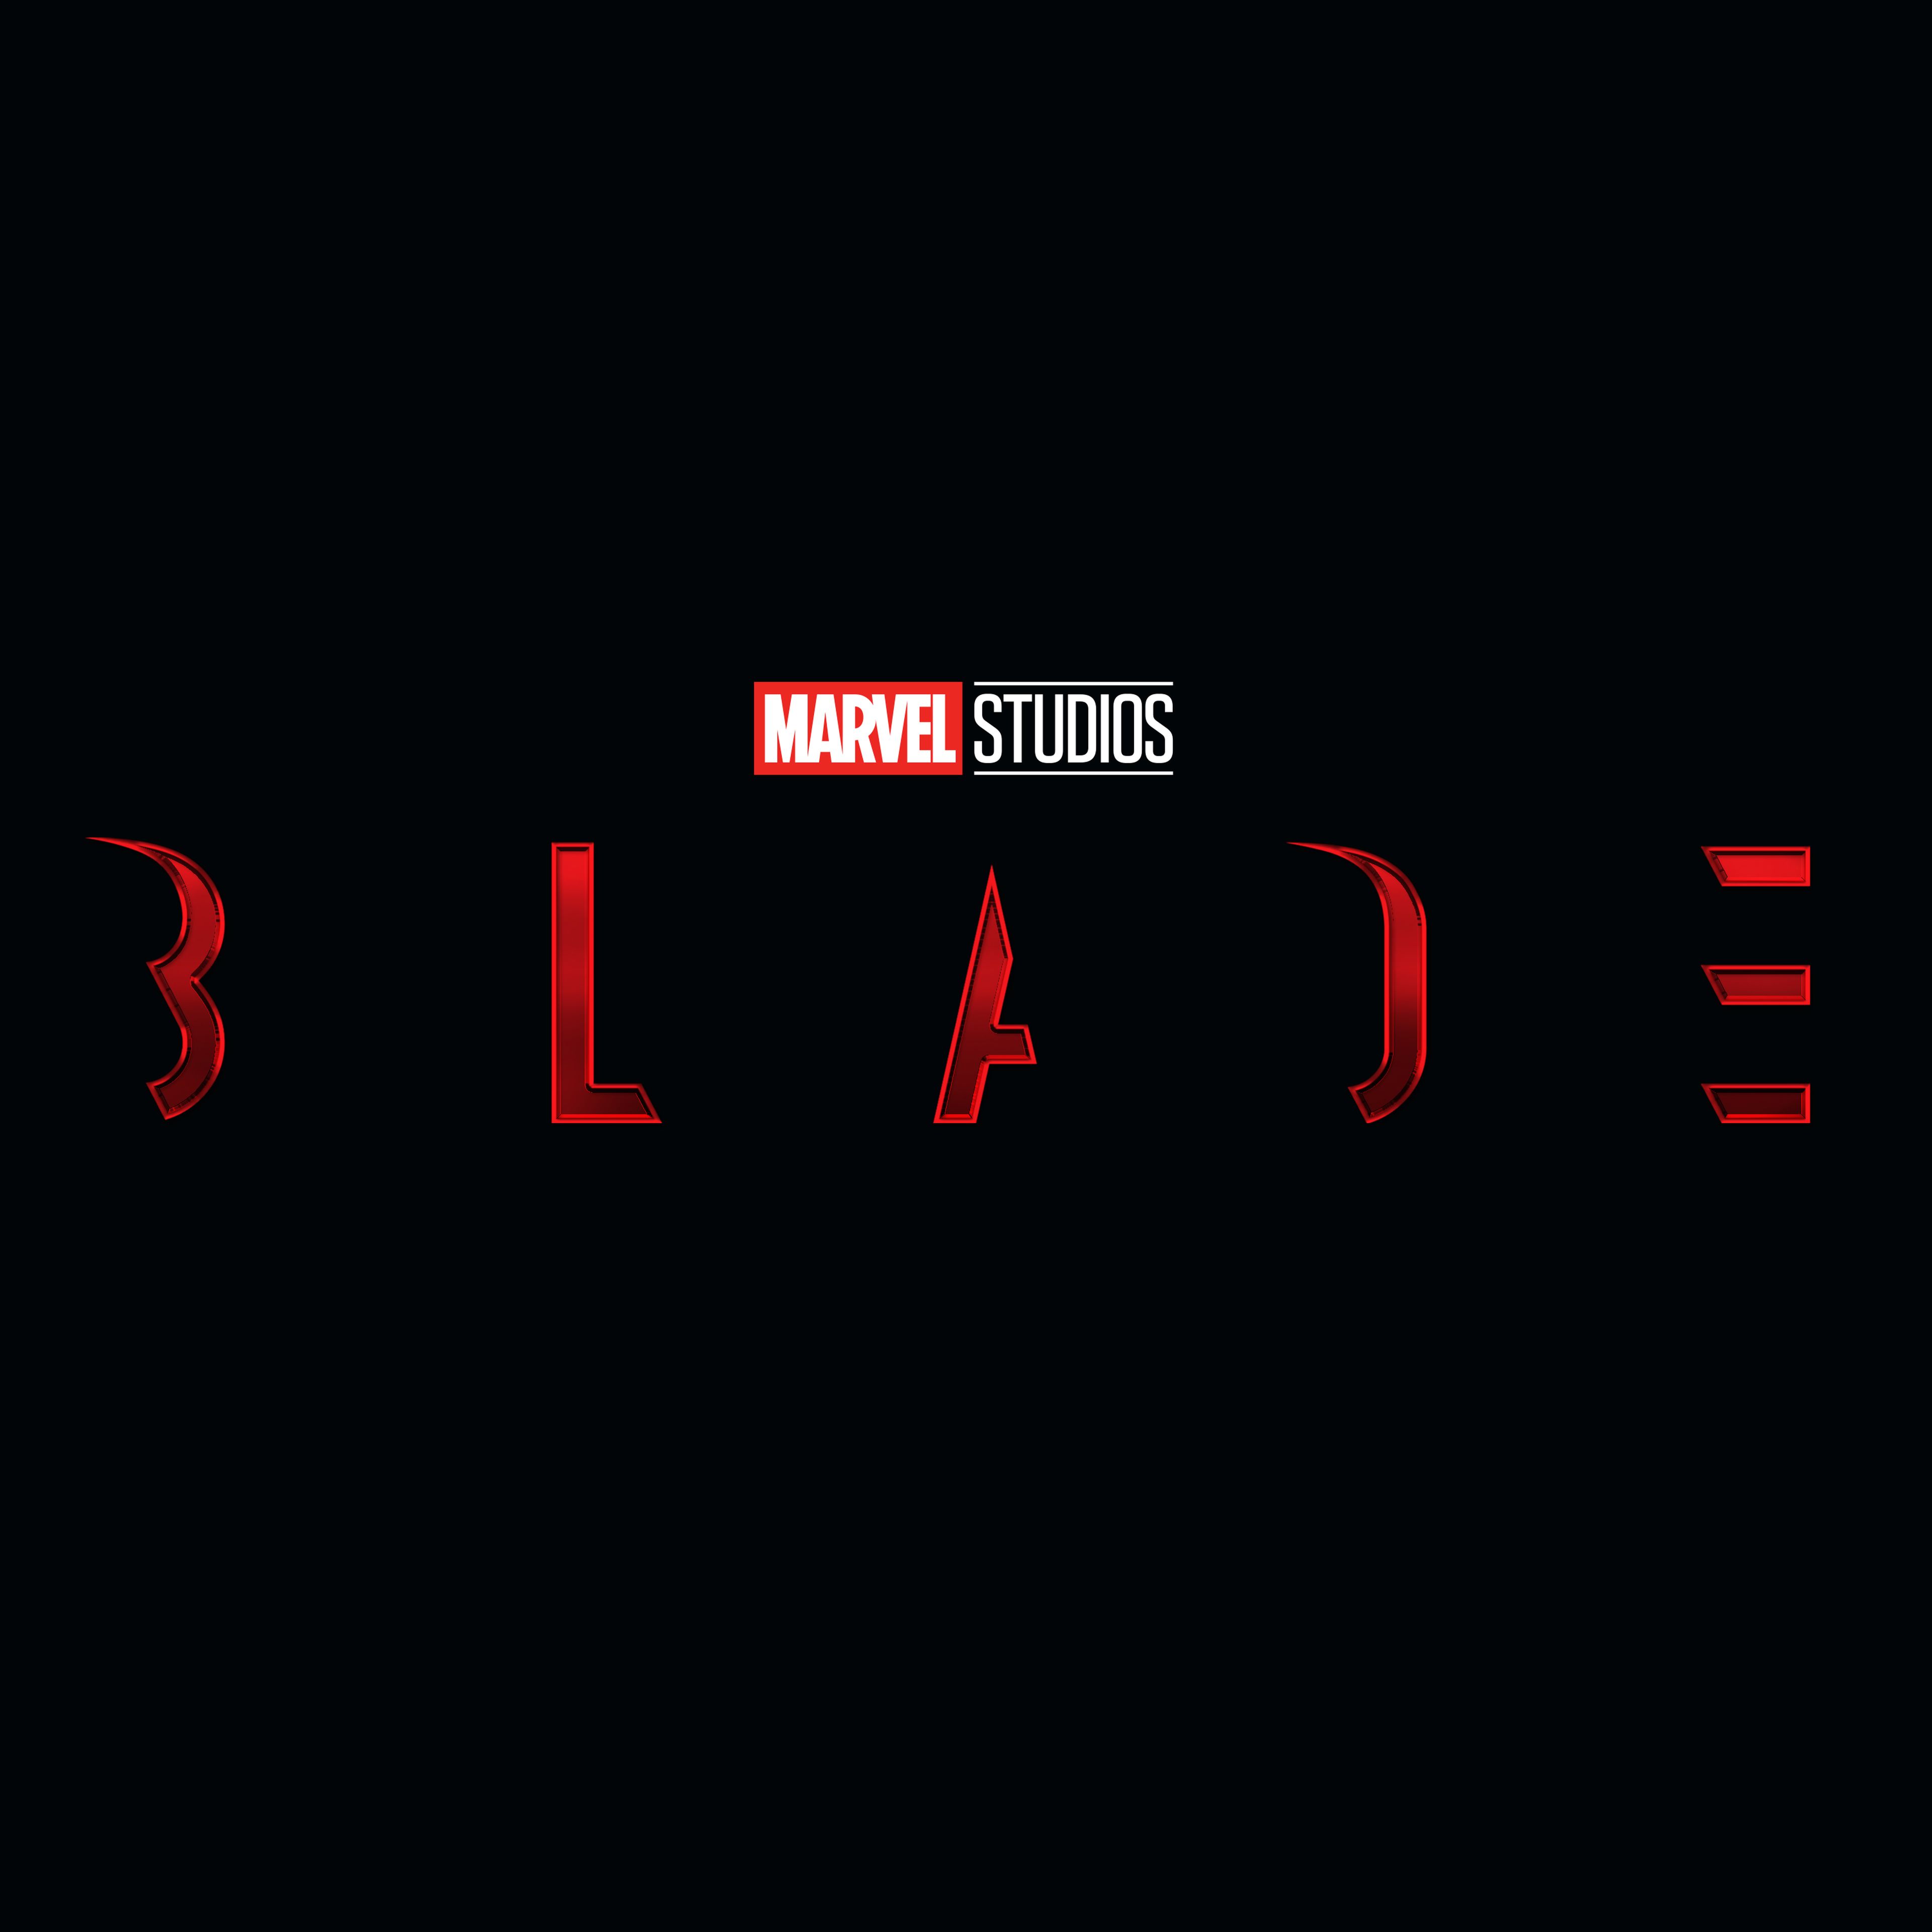 Blade (Marvel Studios)